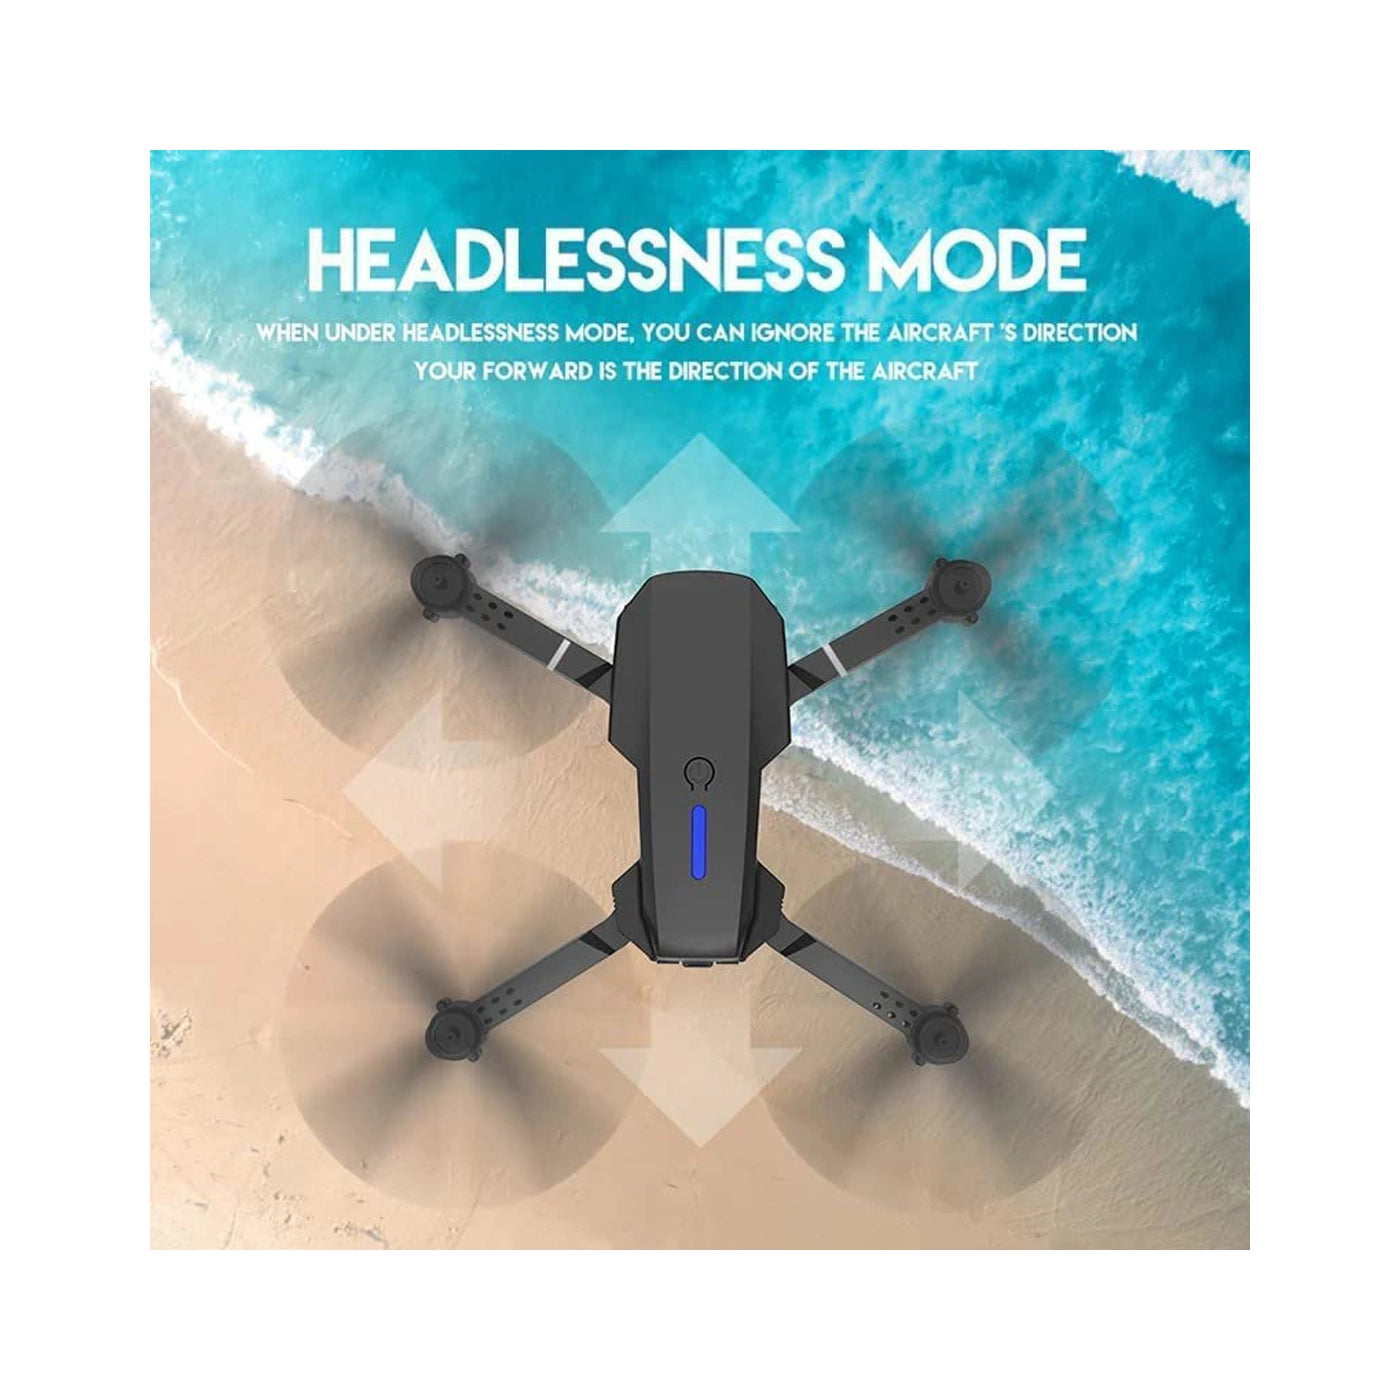 MLB-E88 Pro Drone with Camera WiFi FPV 1080P HD Dual Foldable RC Quadcopter